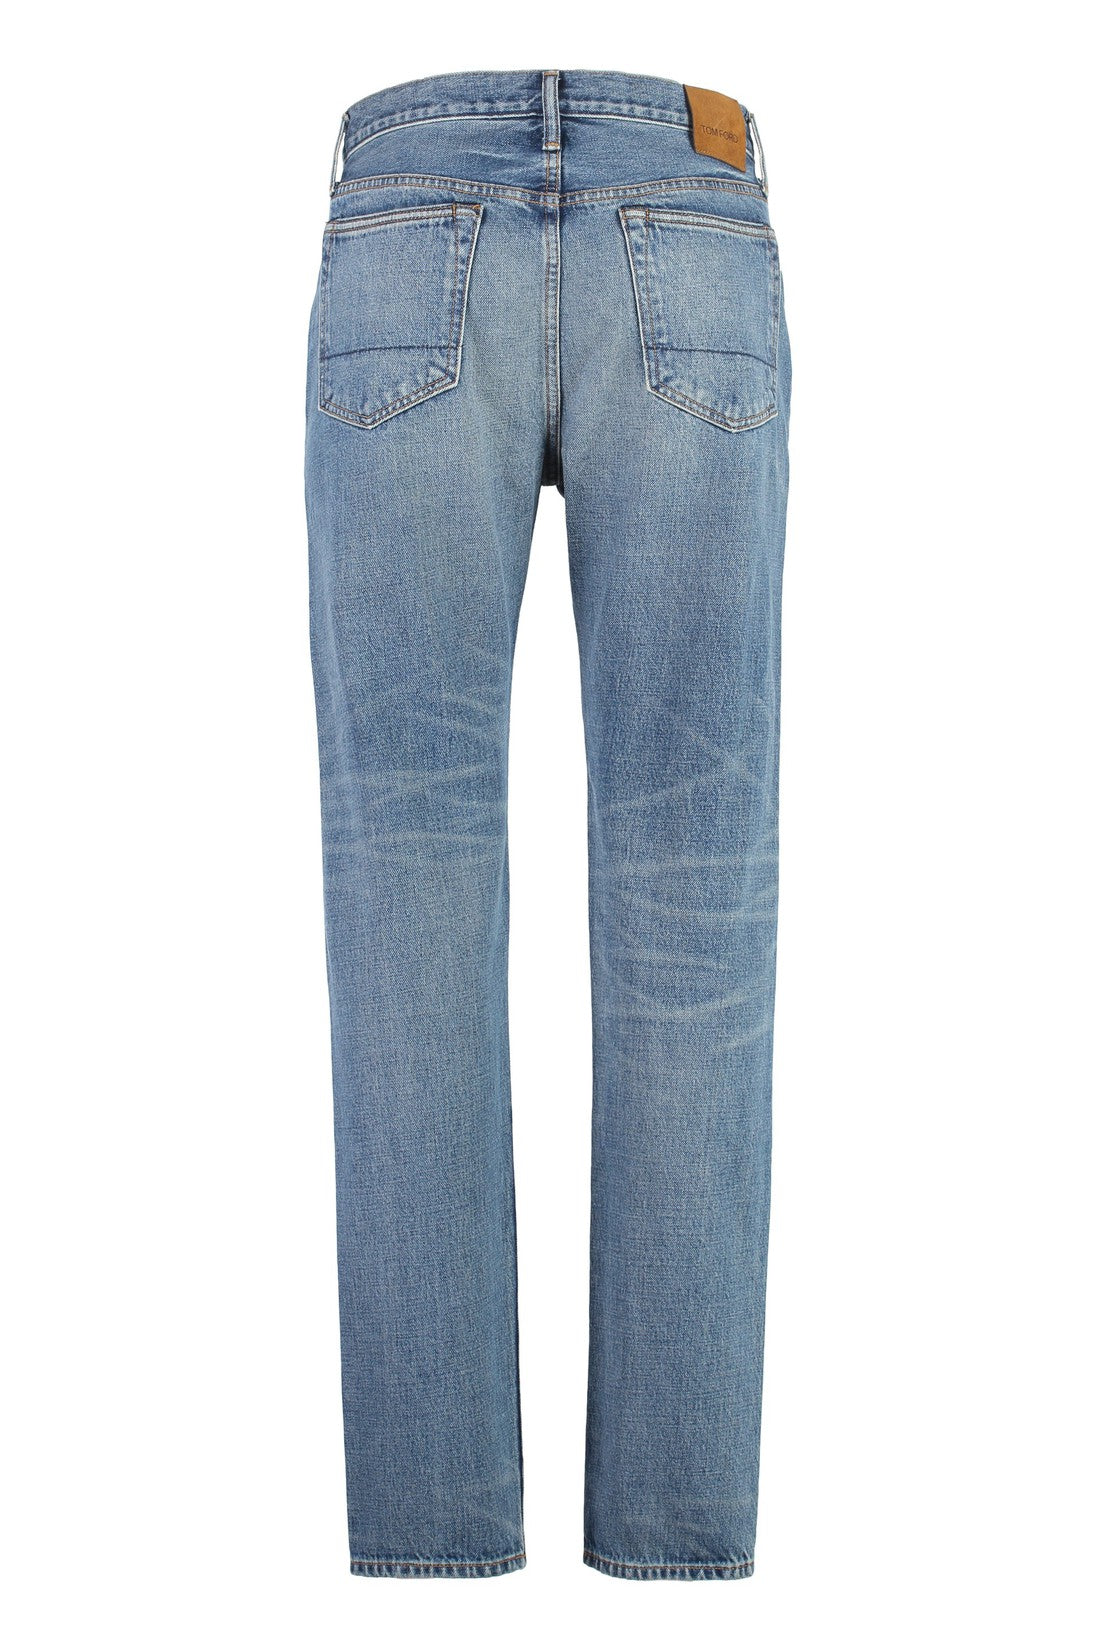 Tom Ford-OUTLET-SALE-5-pocket straight-leg jeans-ARCHIVIST